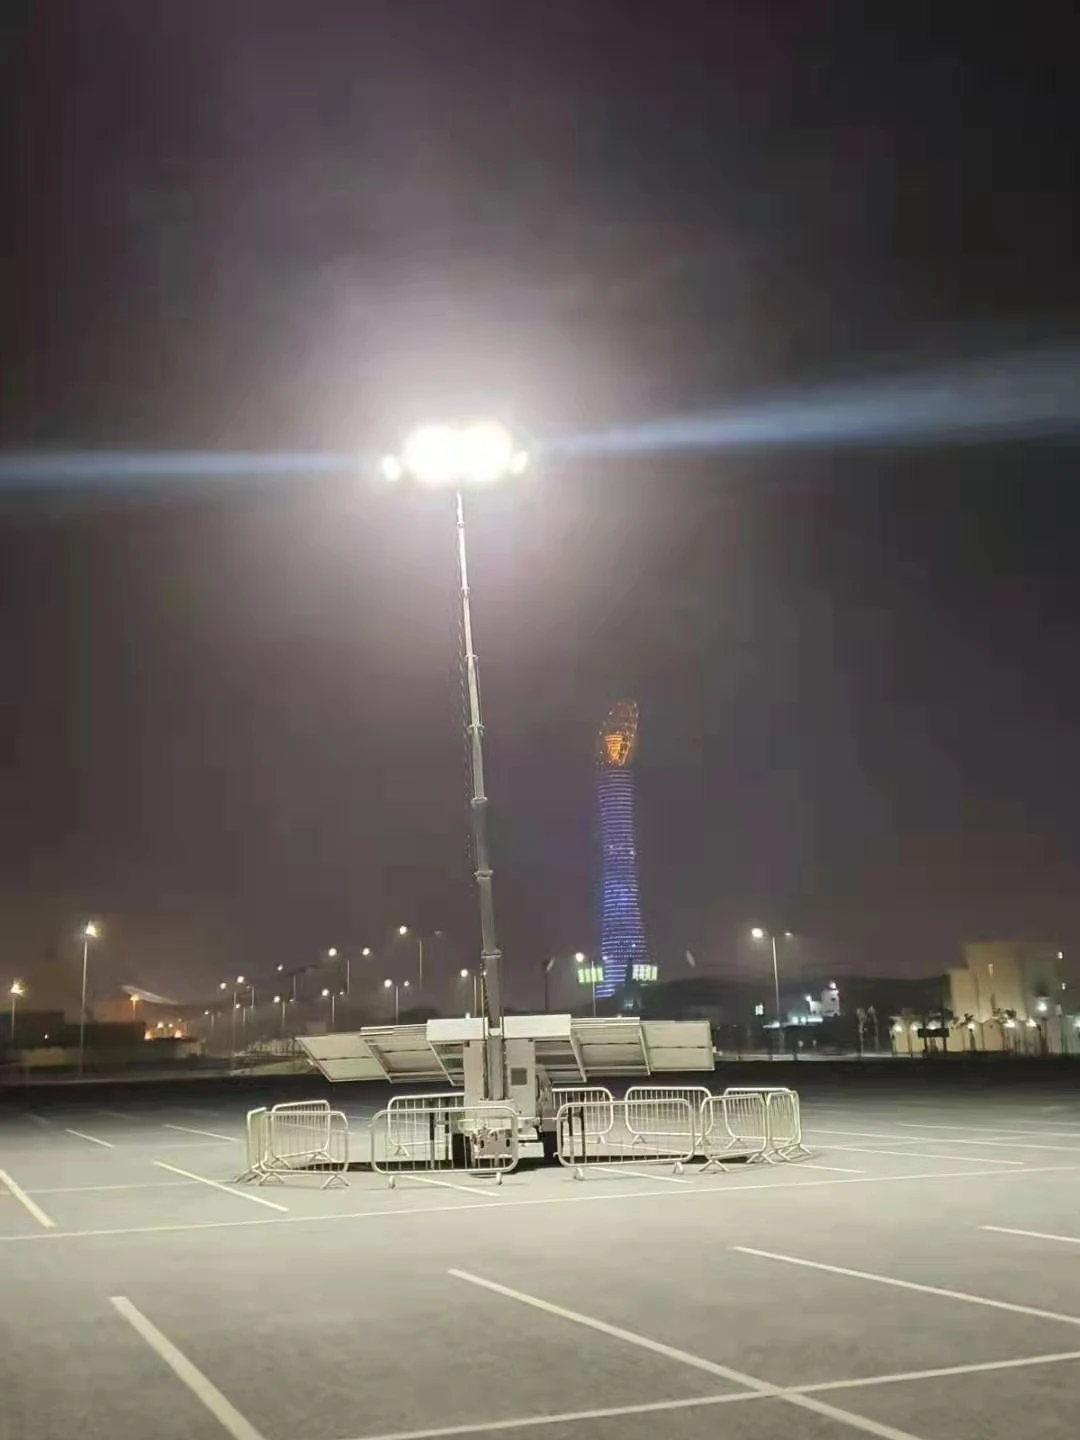 App Detected Solar Light Tower Trailer with Telescopic Mast and 24V 1200W LED FLood Light